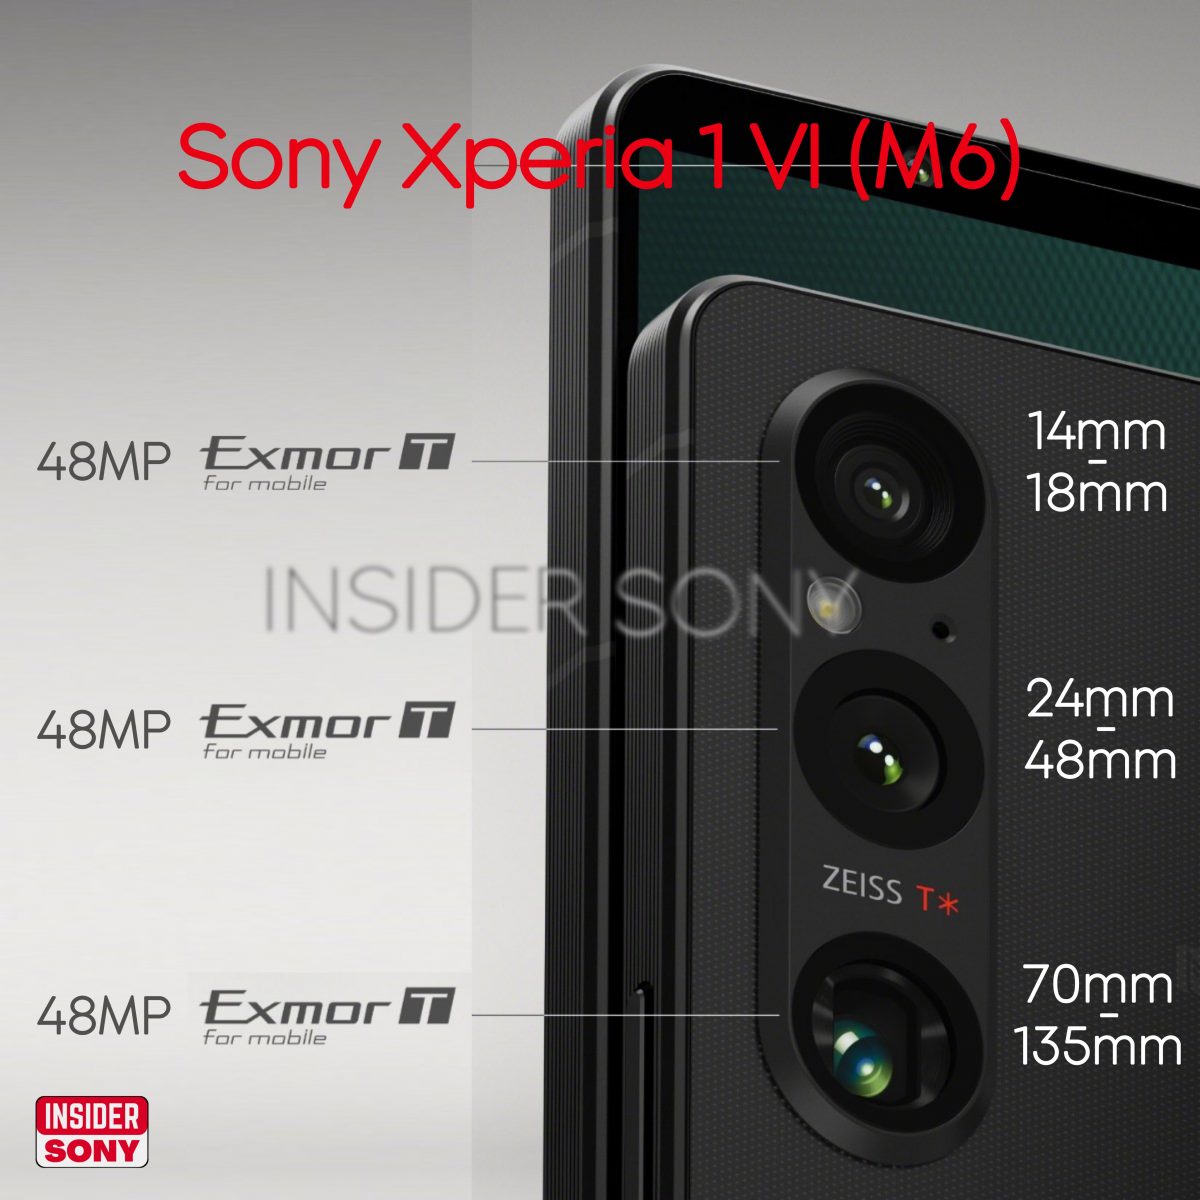 Sony Xperia 1 VI cena specyfikacja aparat